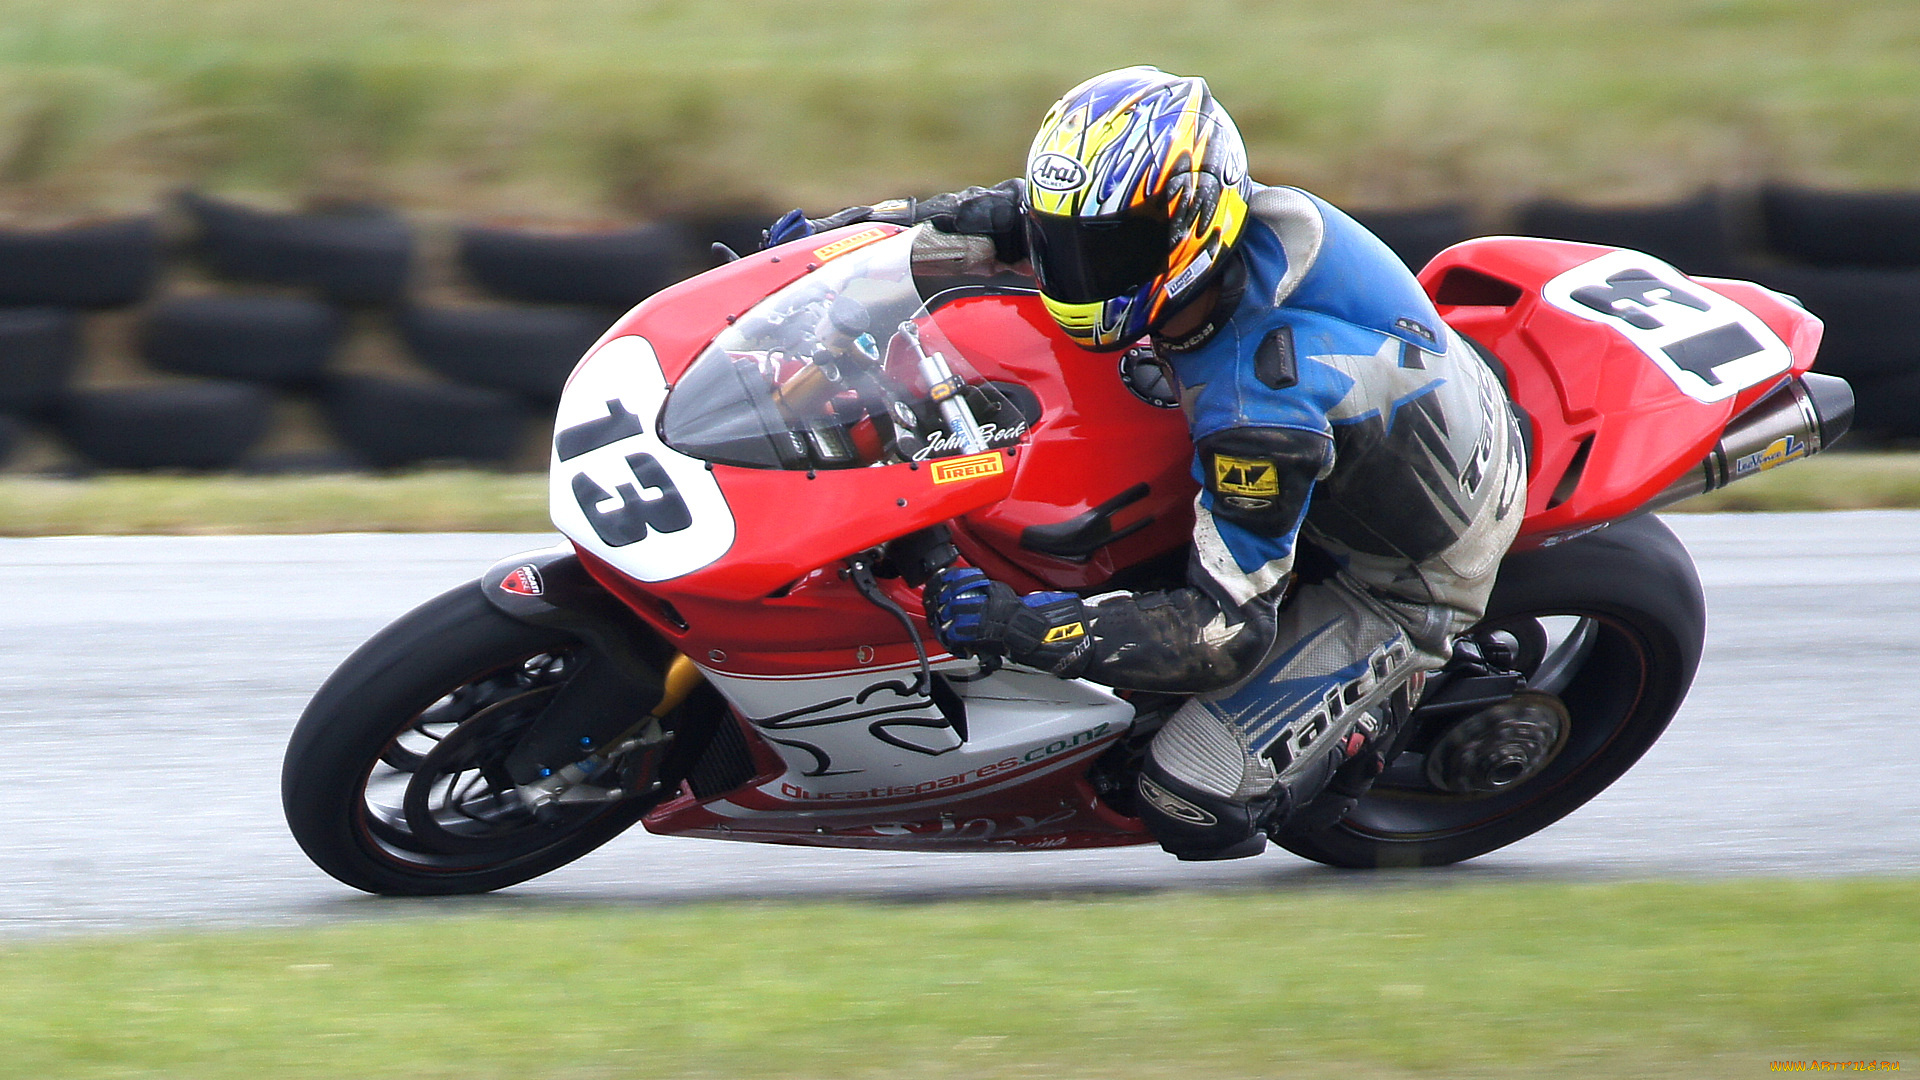 2008, ducati, 1098, , john, beck, спорт, мотоспорт, трек, шлем, экипировка, гонщик, байк